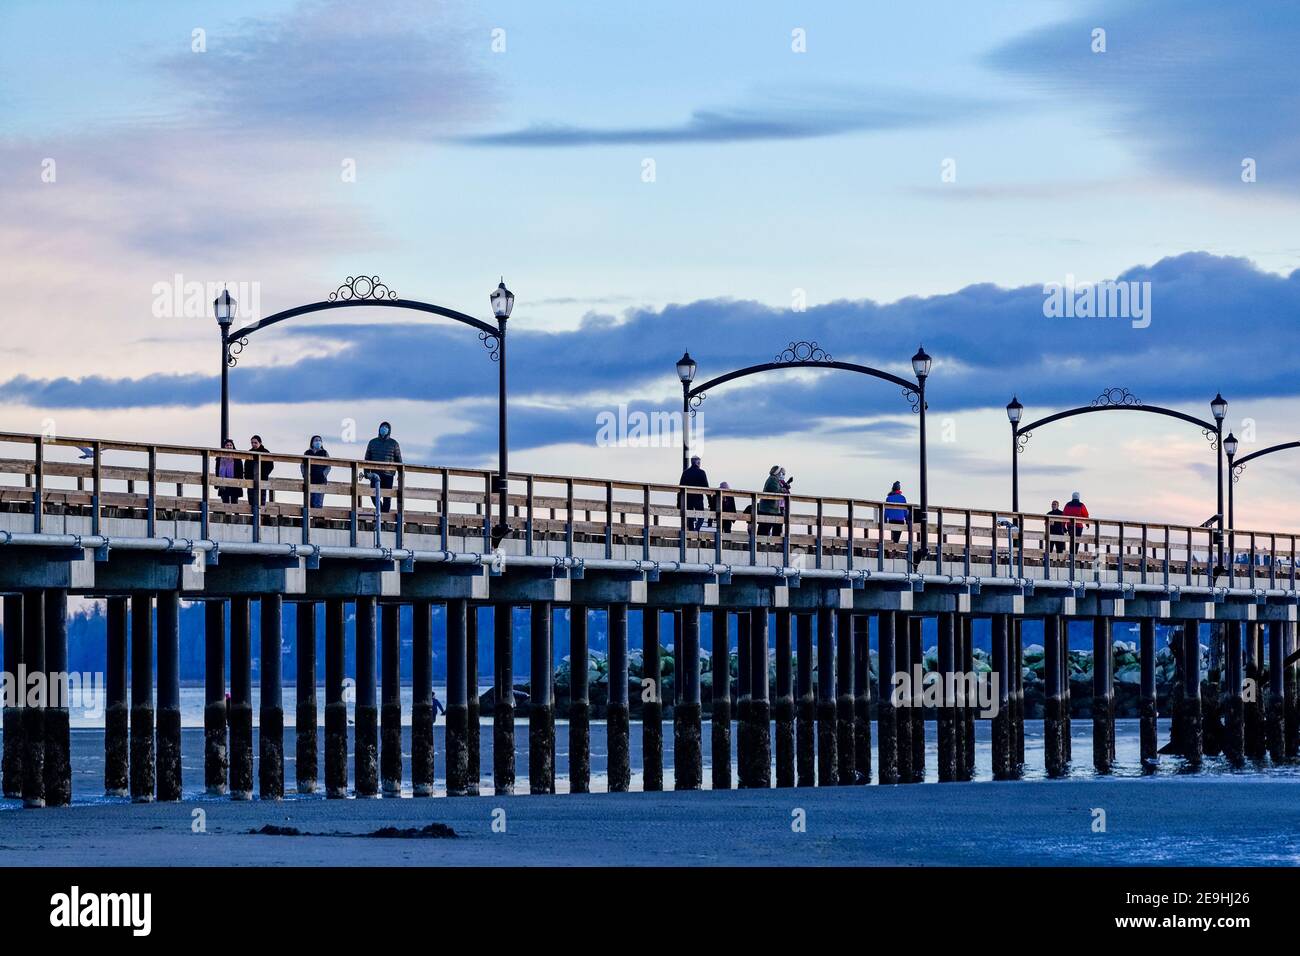 Kanadas längster Pier, White Rock, British Columbia, Kanada Stockfoto